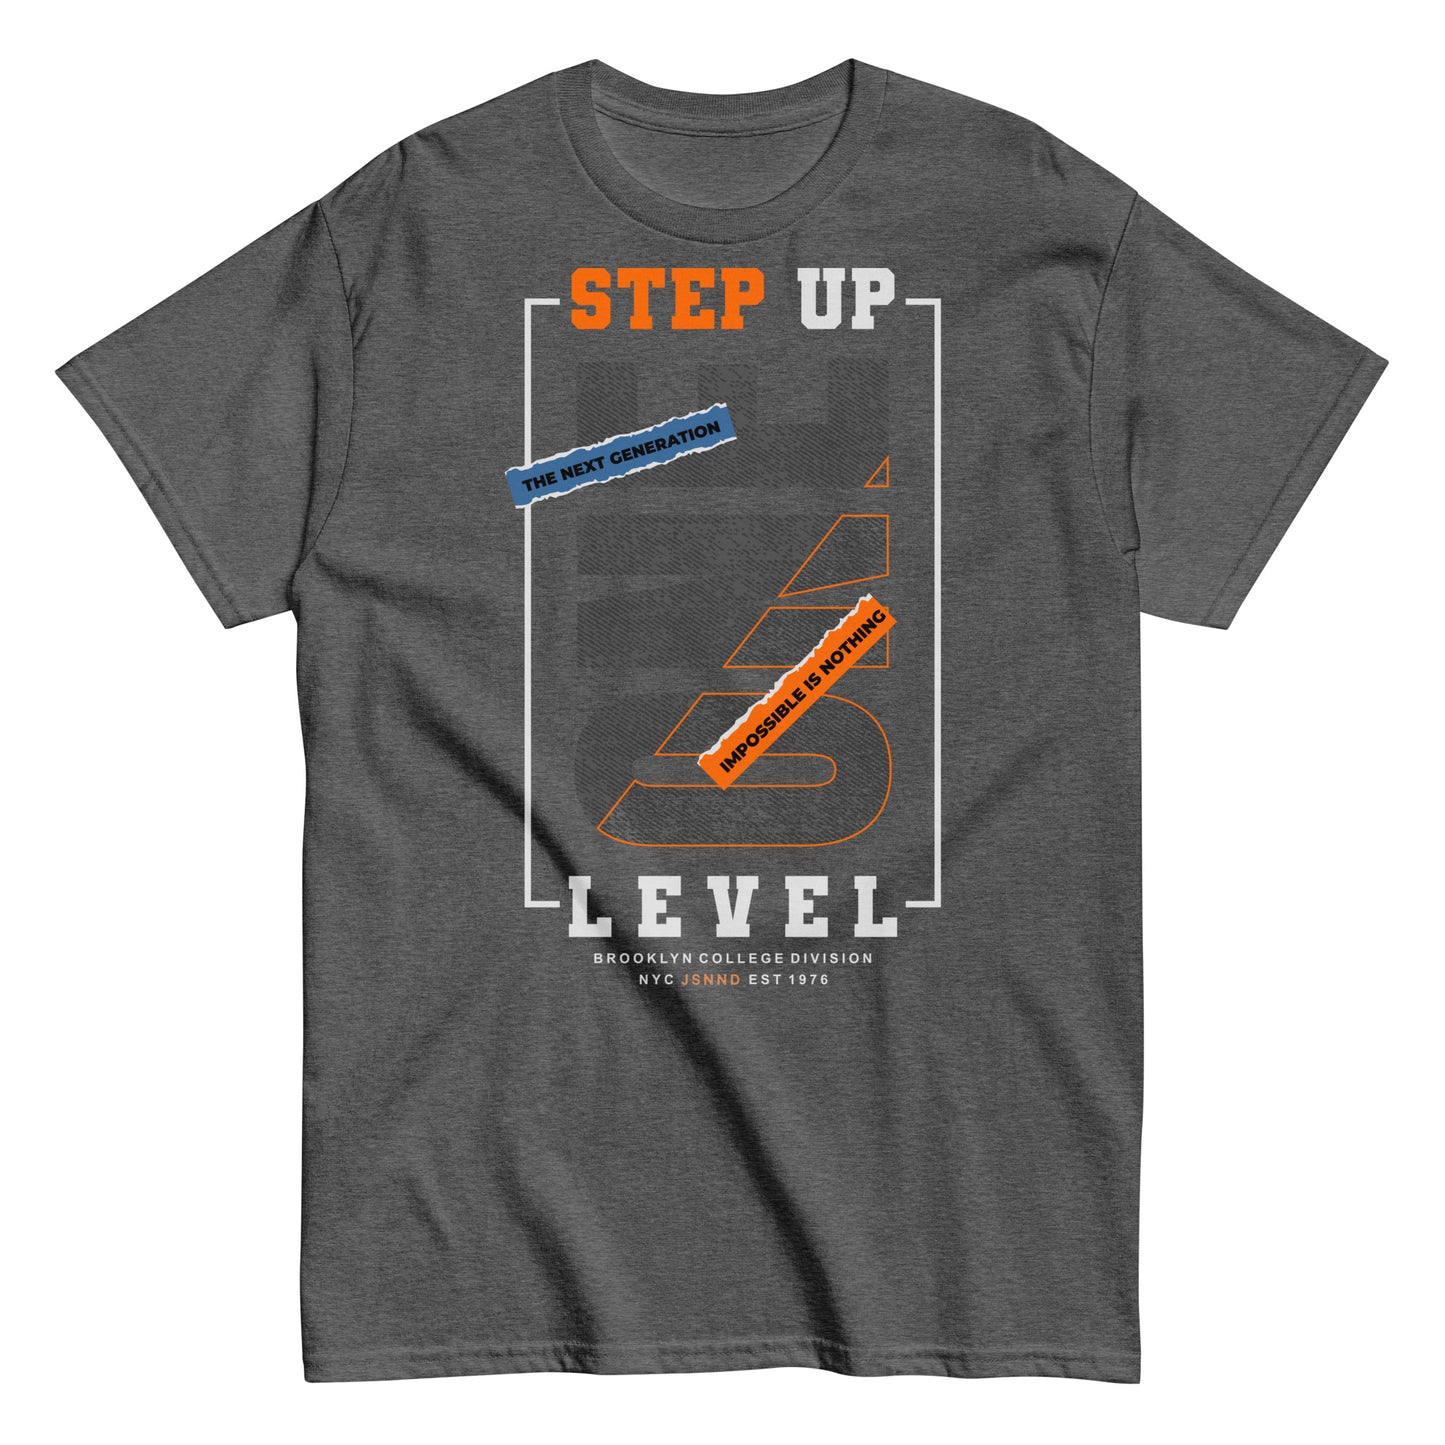 Level One T-shirt